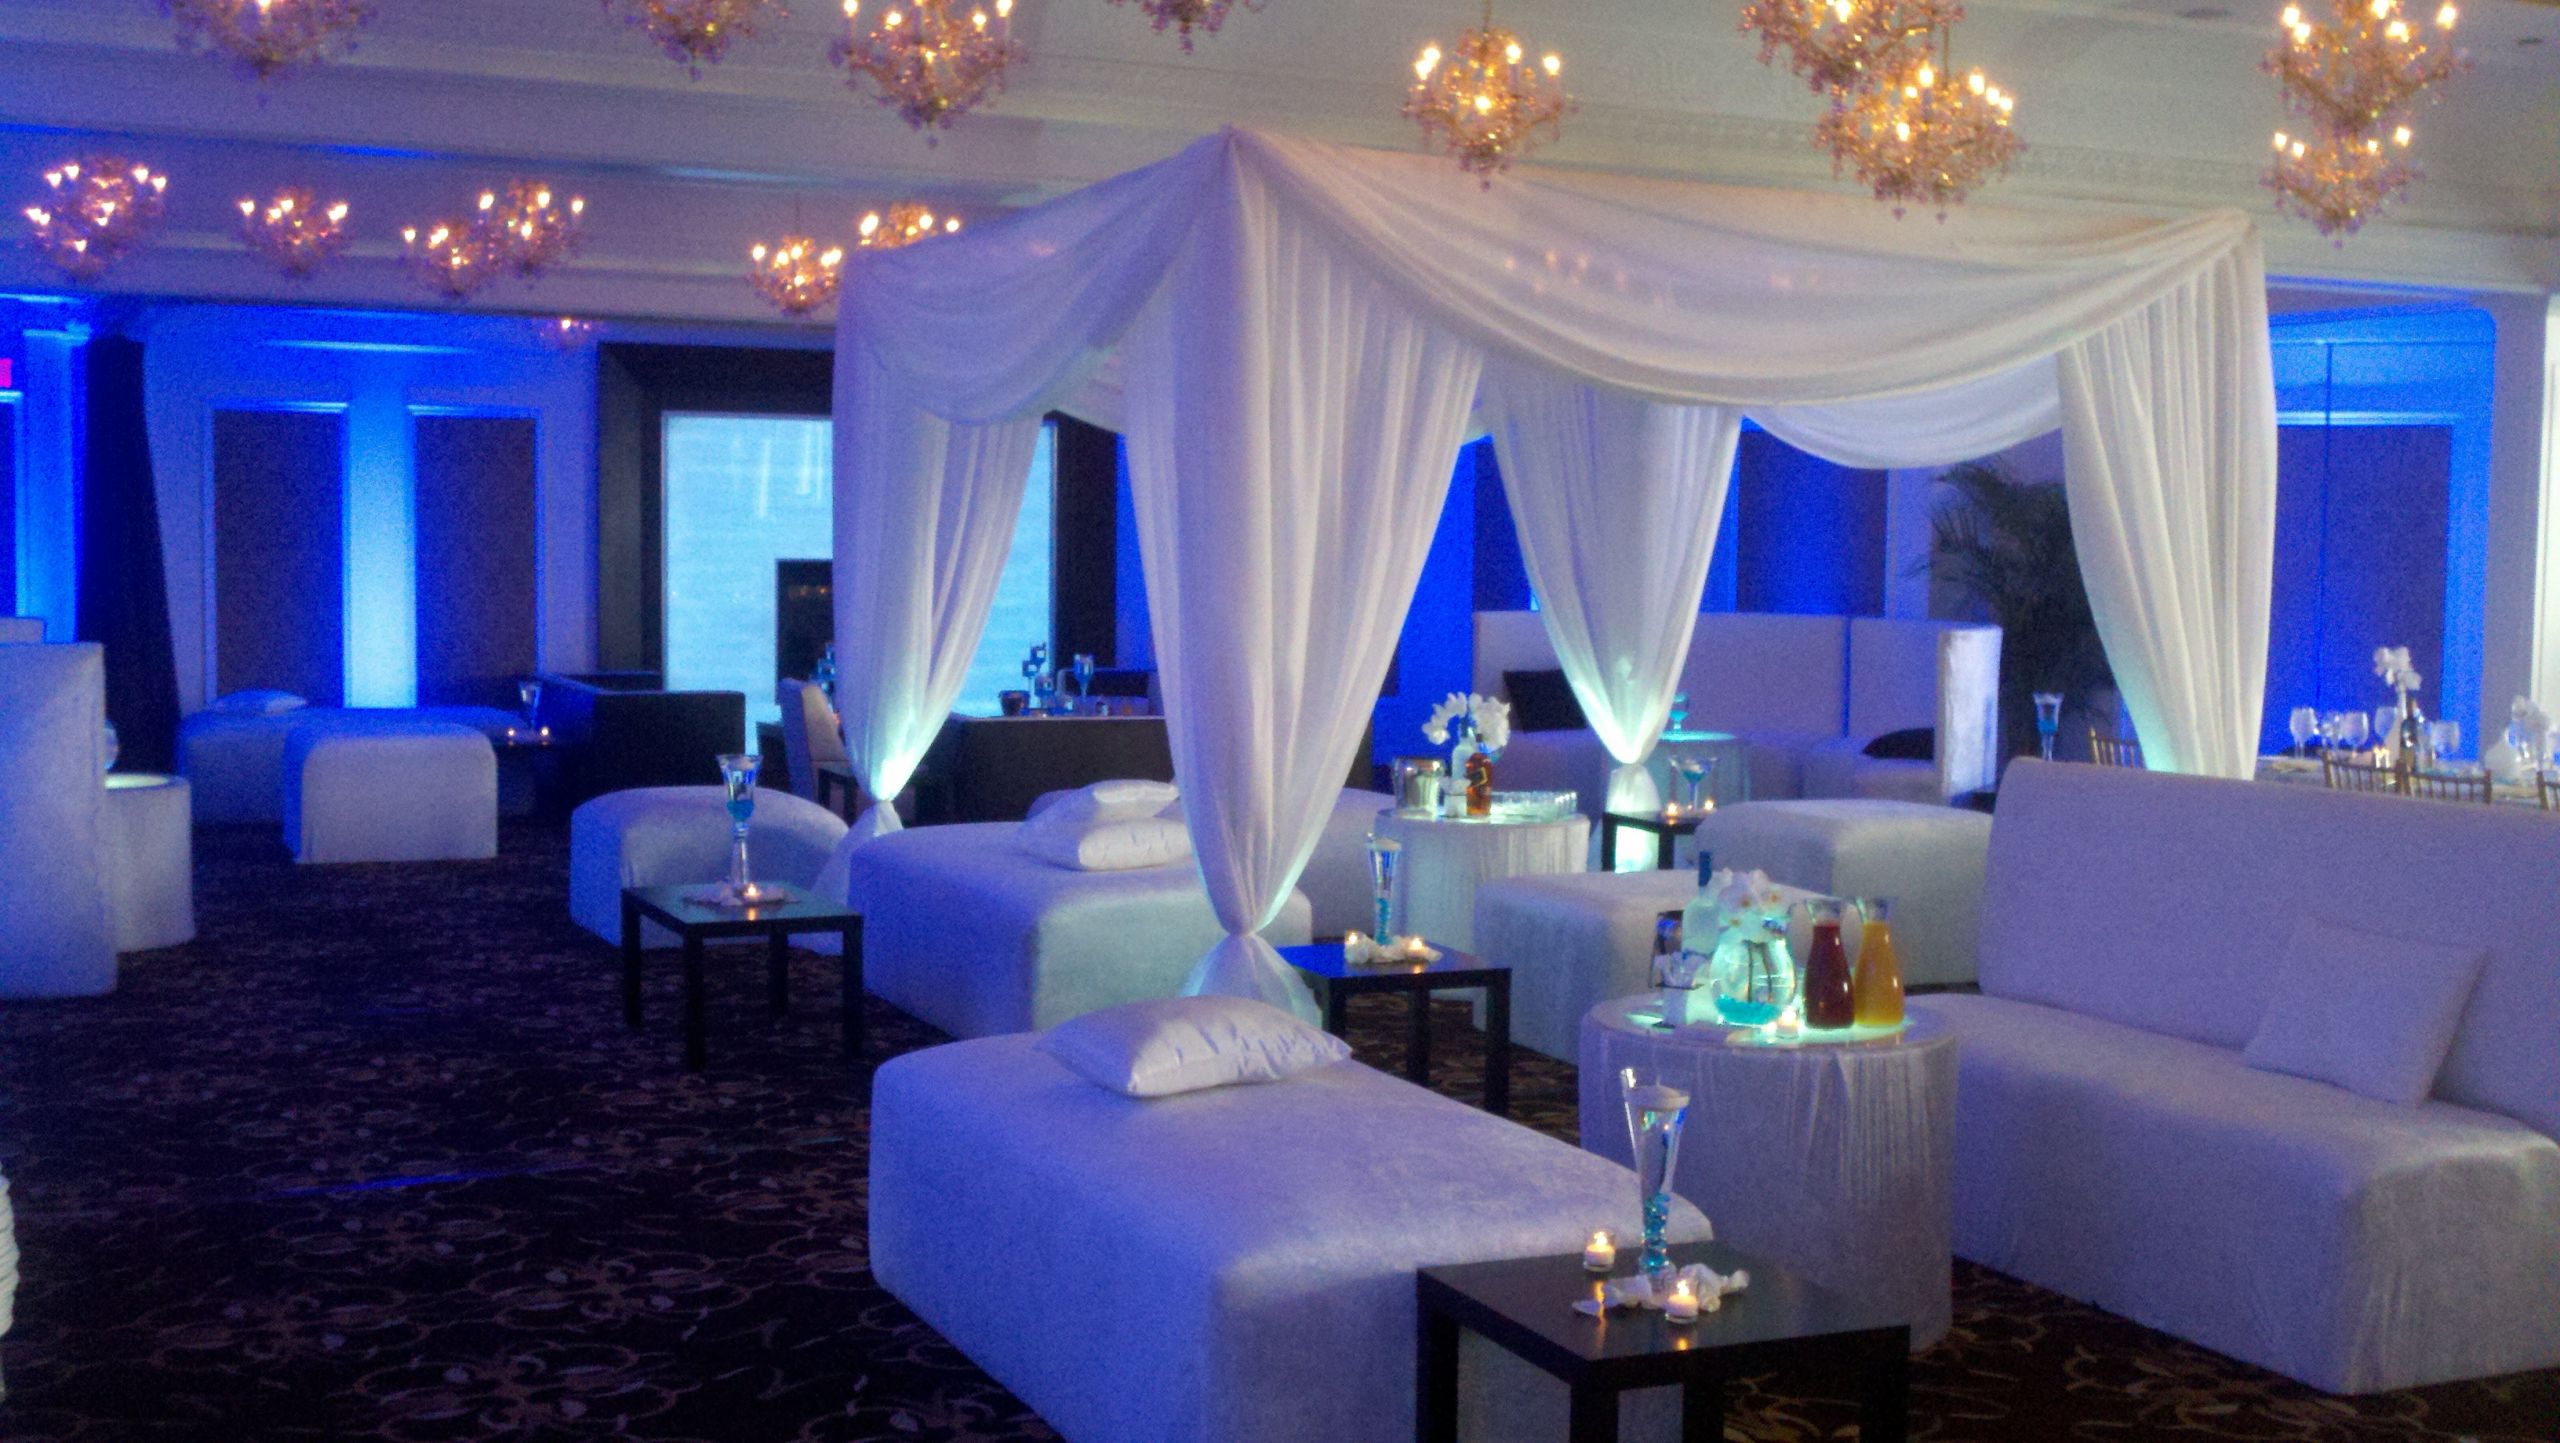 Engagement Party Ideas Nj
 Top NJ DJs Provide Lounge Furniture for Weddings Sweet